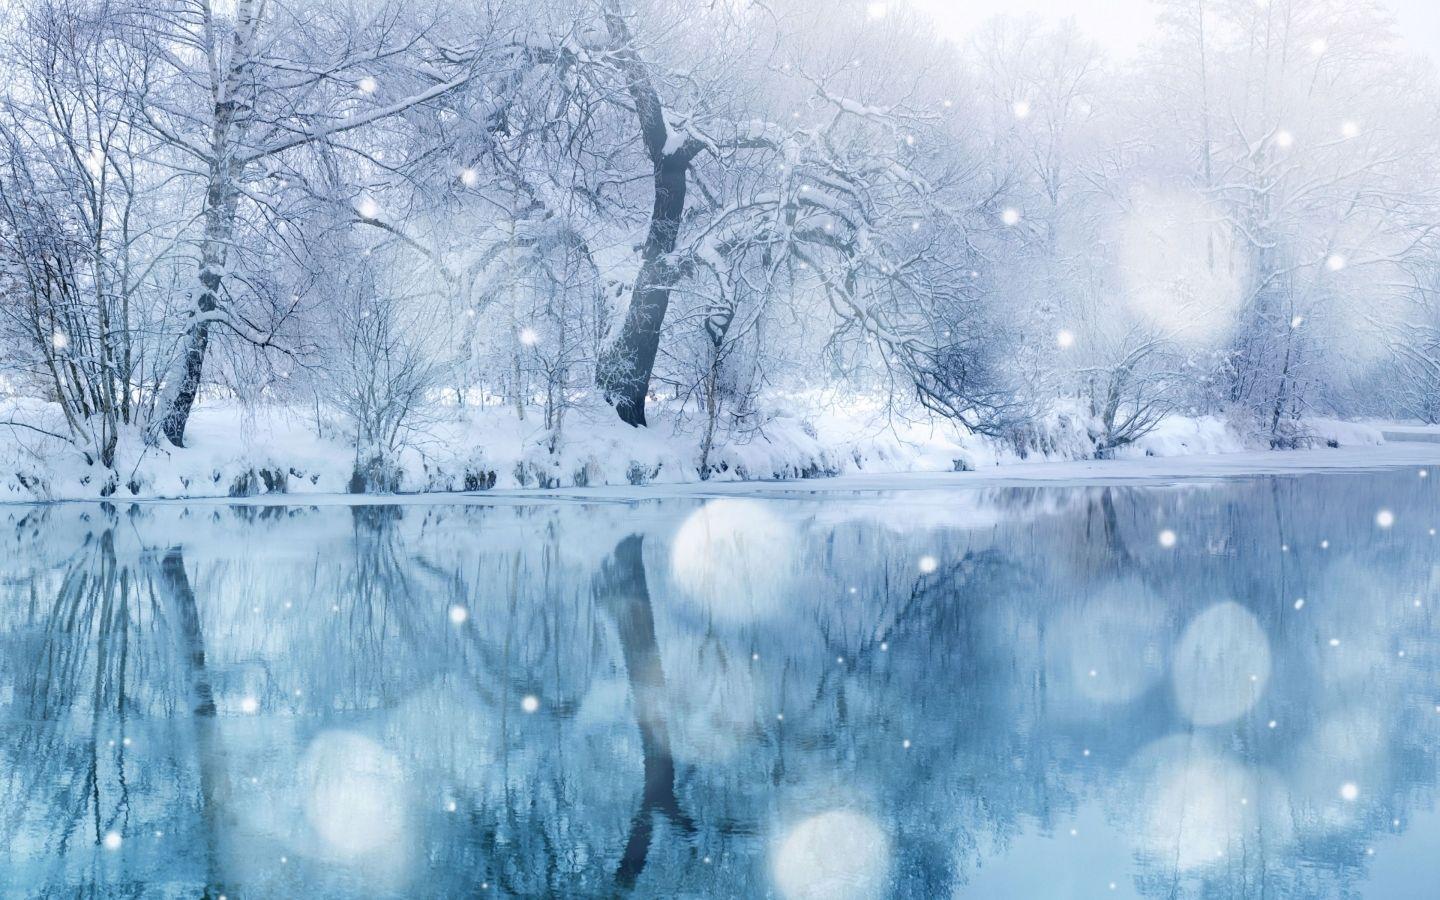 Winter Snowfall Mac Wallpaper Download. Free Mac Wallpaper Download